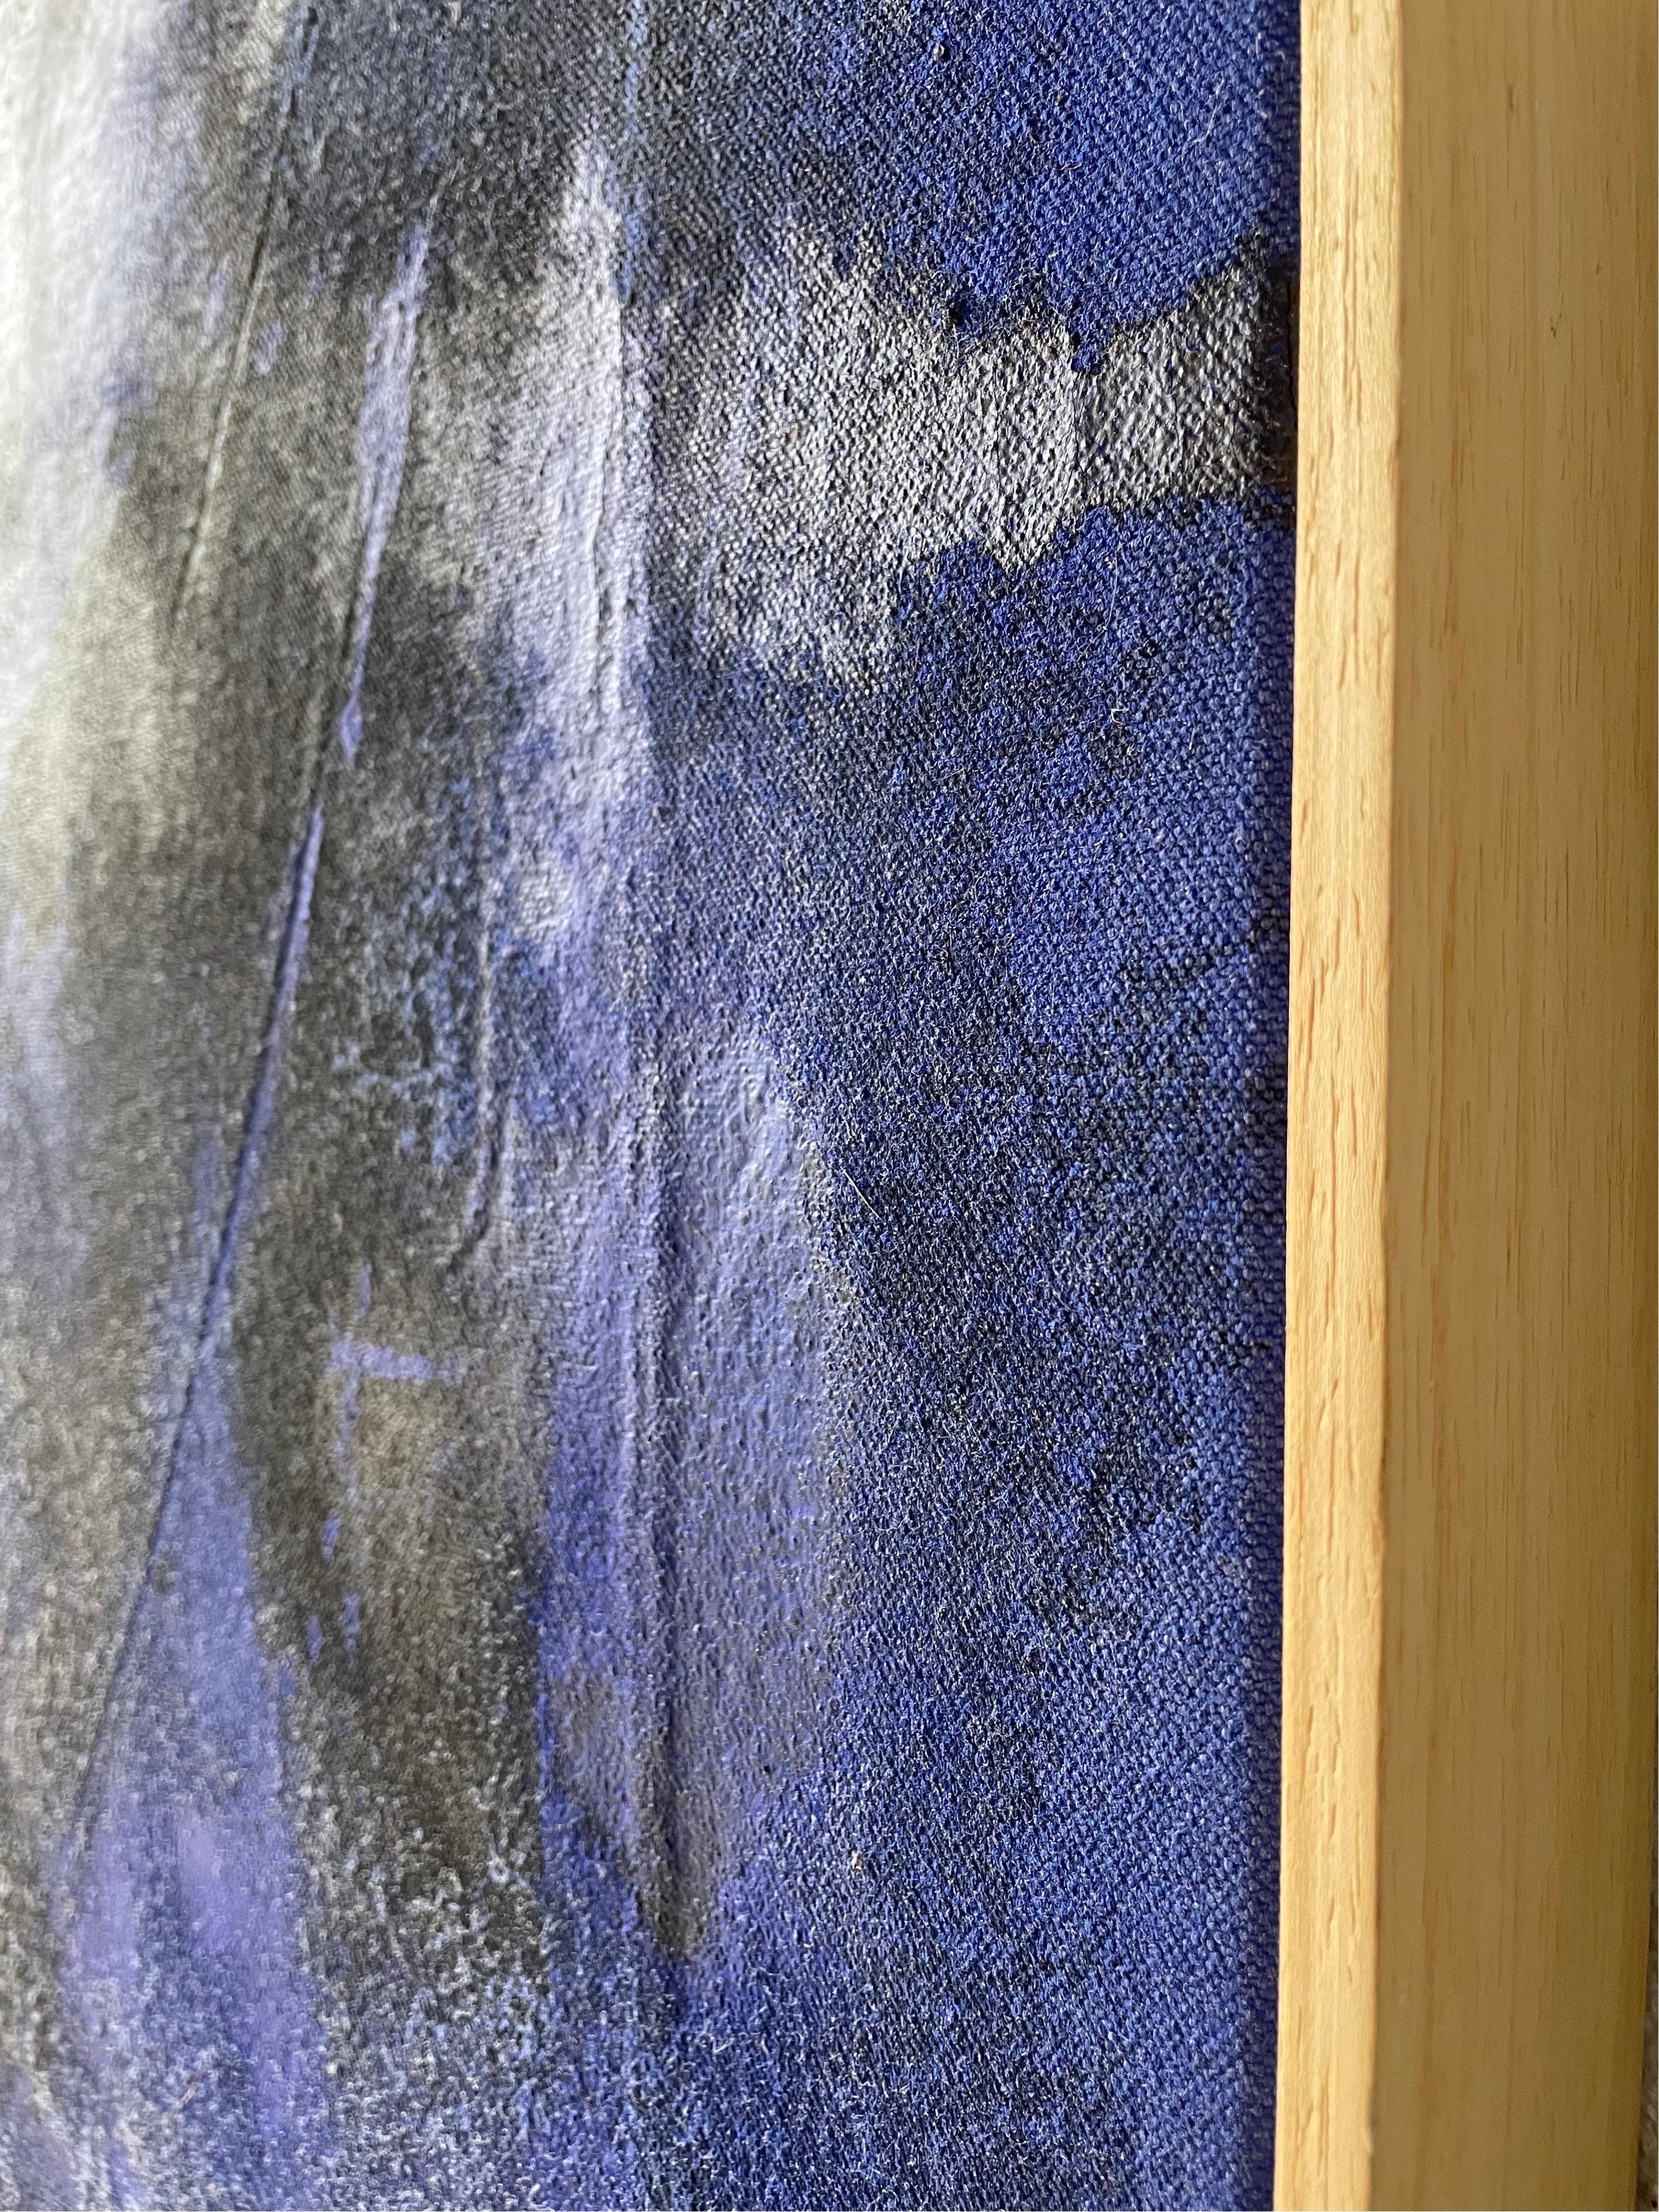 ABSTRACT Painting Texture Blue Contemporary Spanish Artist Iñaki Moreno 2022 1